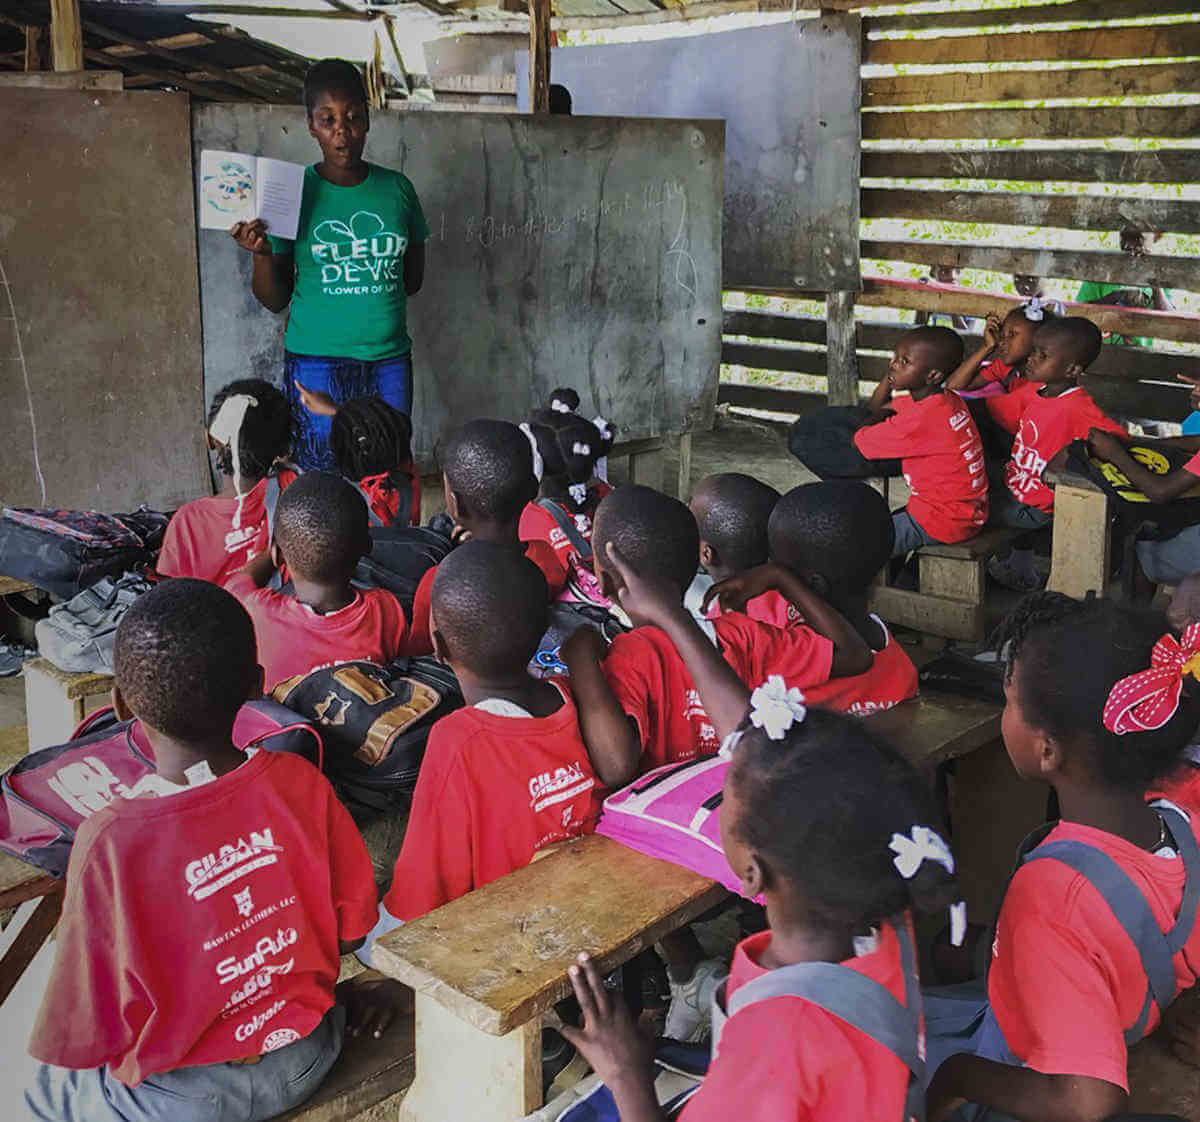 Fleur de Vie helps children return to school in Haiti|Fleur de Vie helps children return to school in Haiti